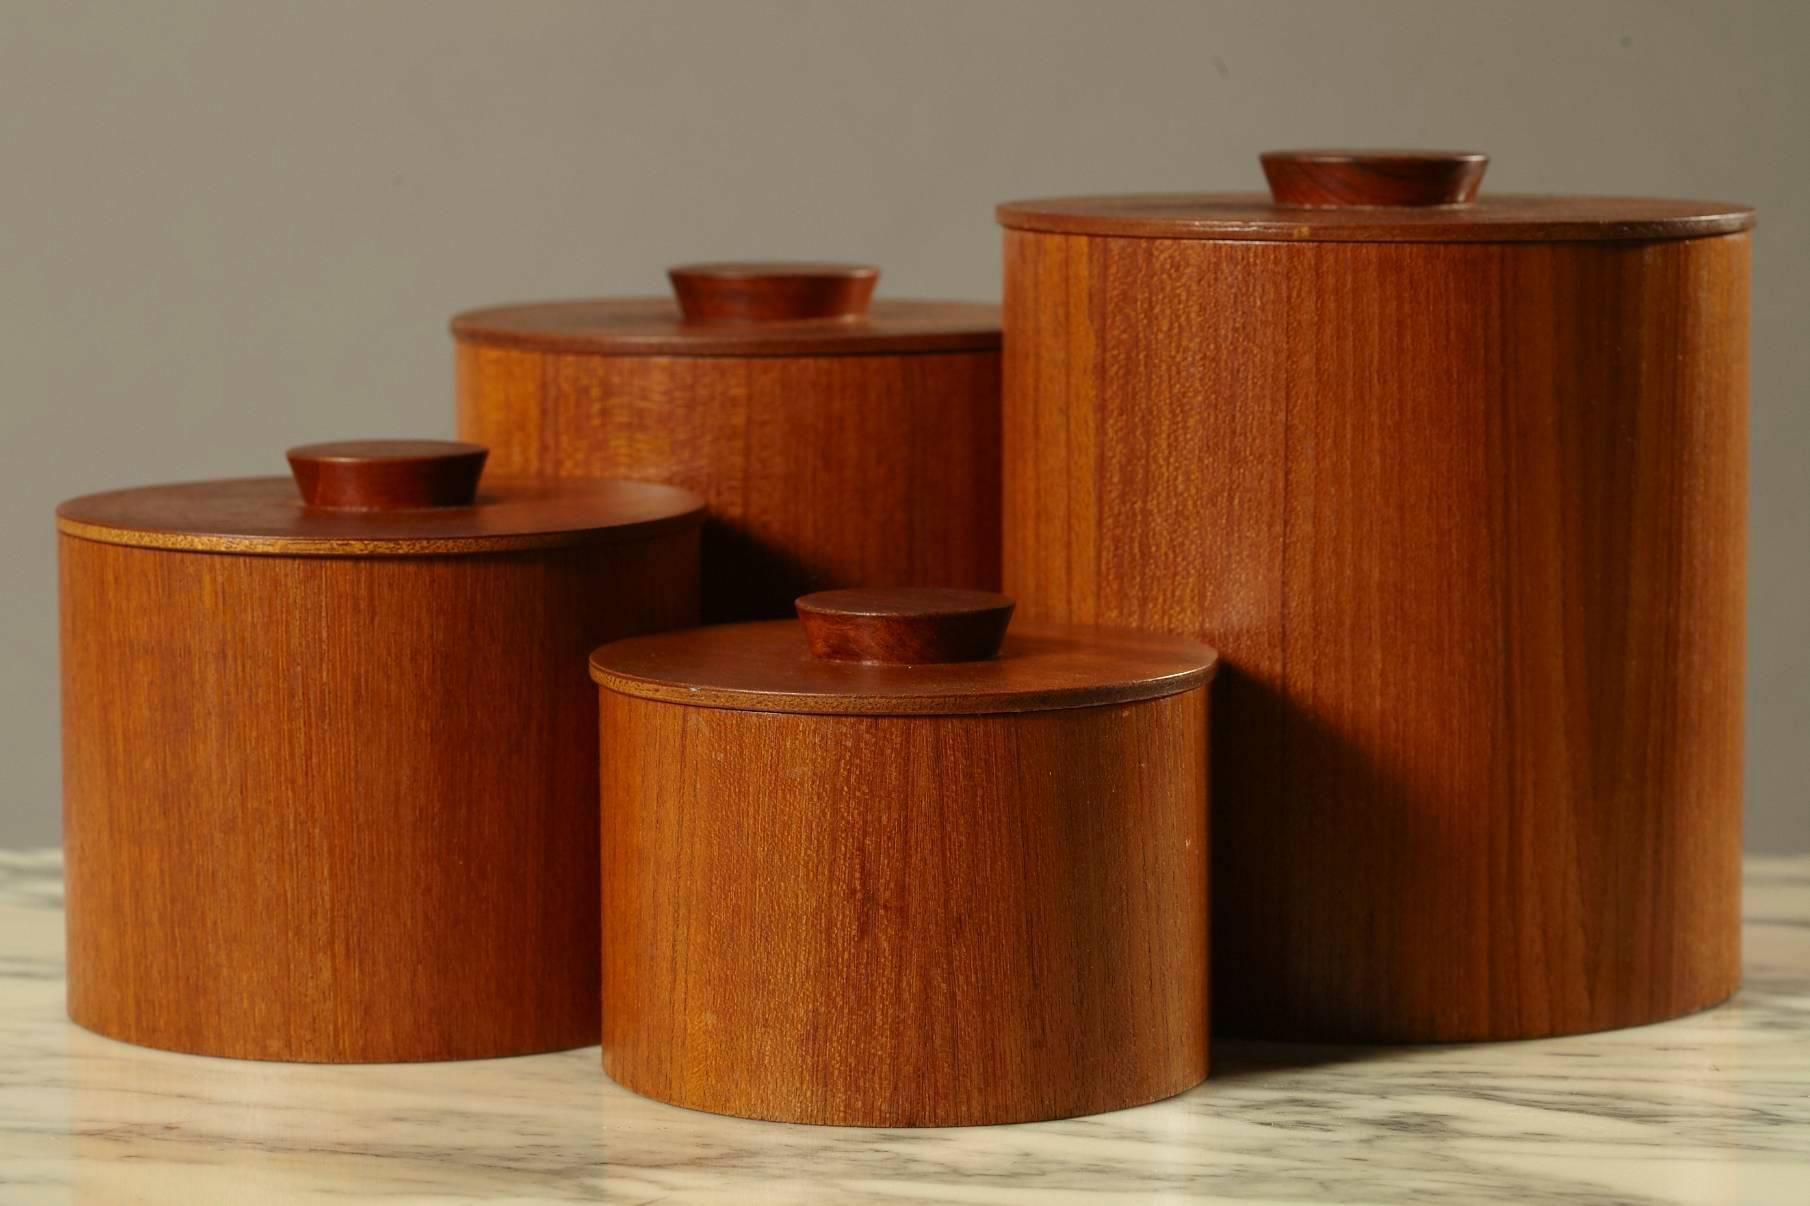 6.25”x6.25” ; no repairs // canister mid century Scandinavian design Vintage Danish modern lidded ROSEWOOD storage box Jar